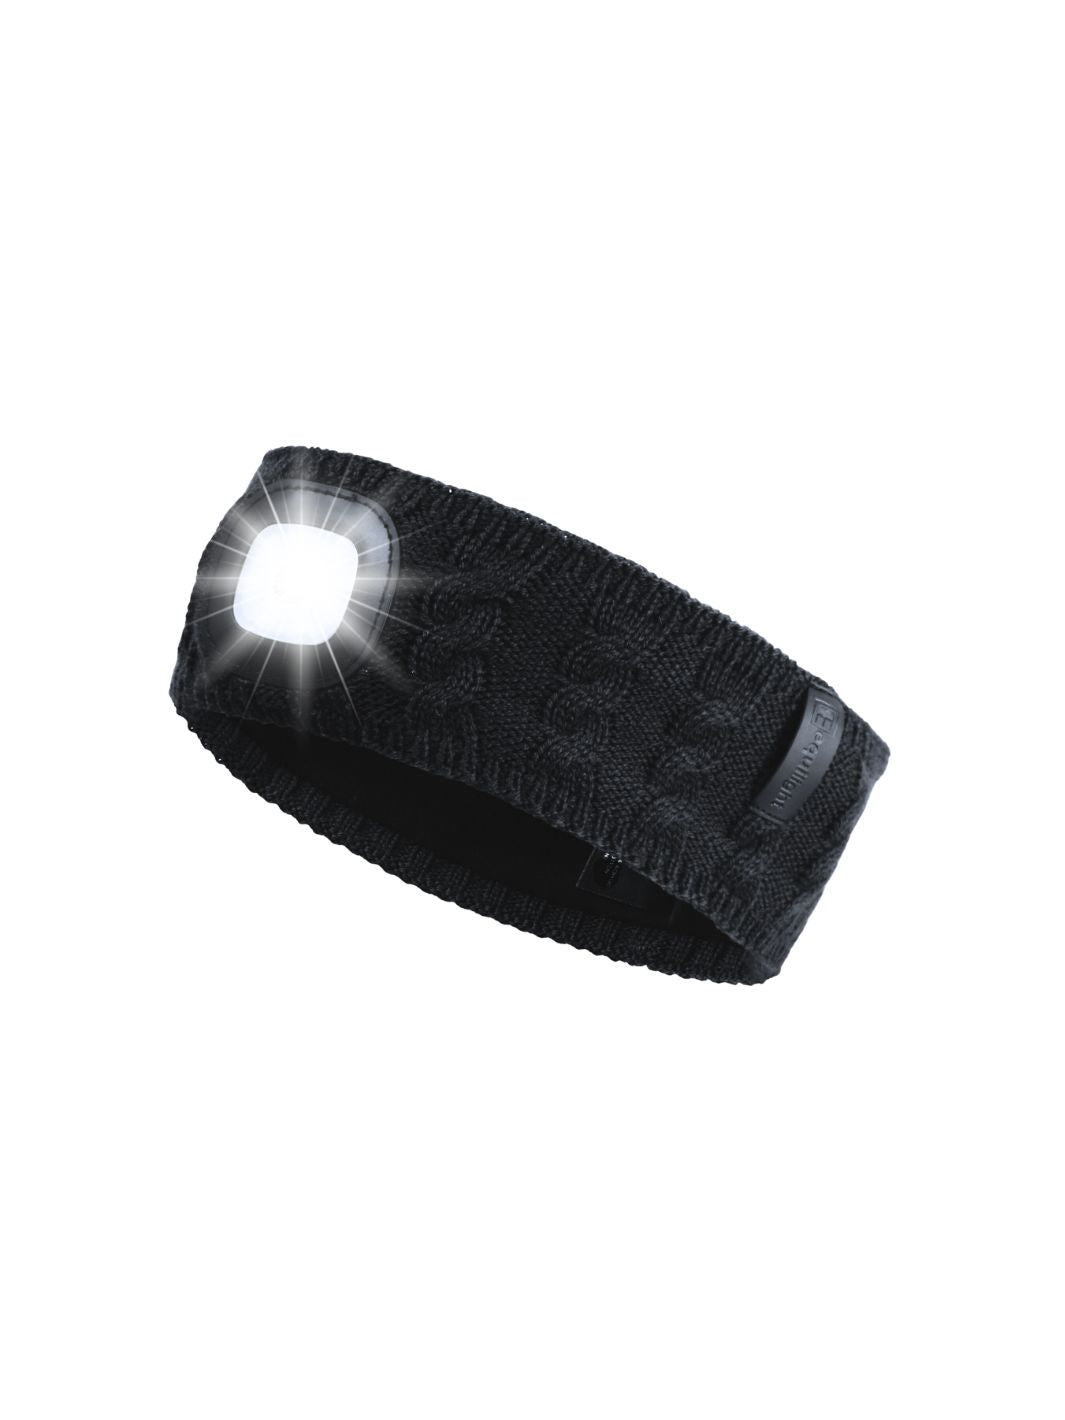 Illuminate Every Adventure With The Classic LED Headband ®